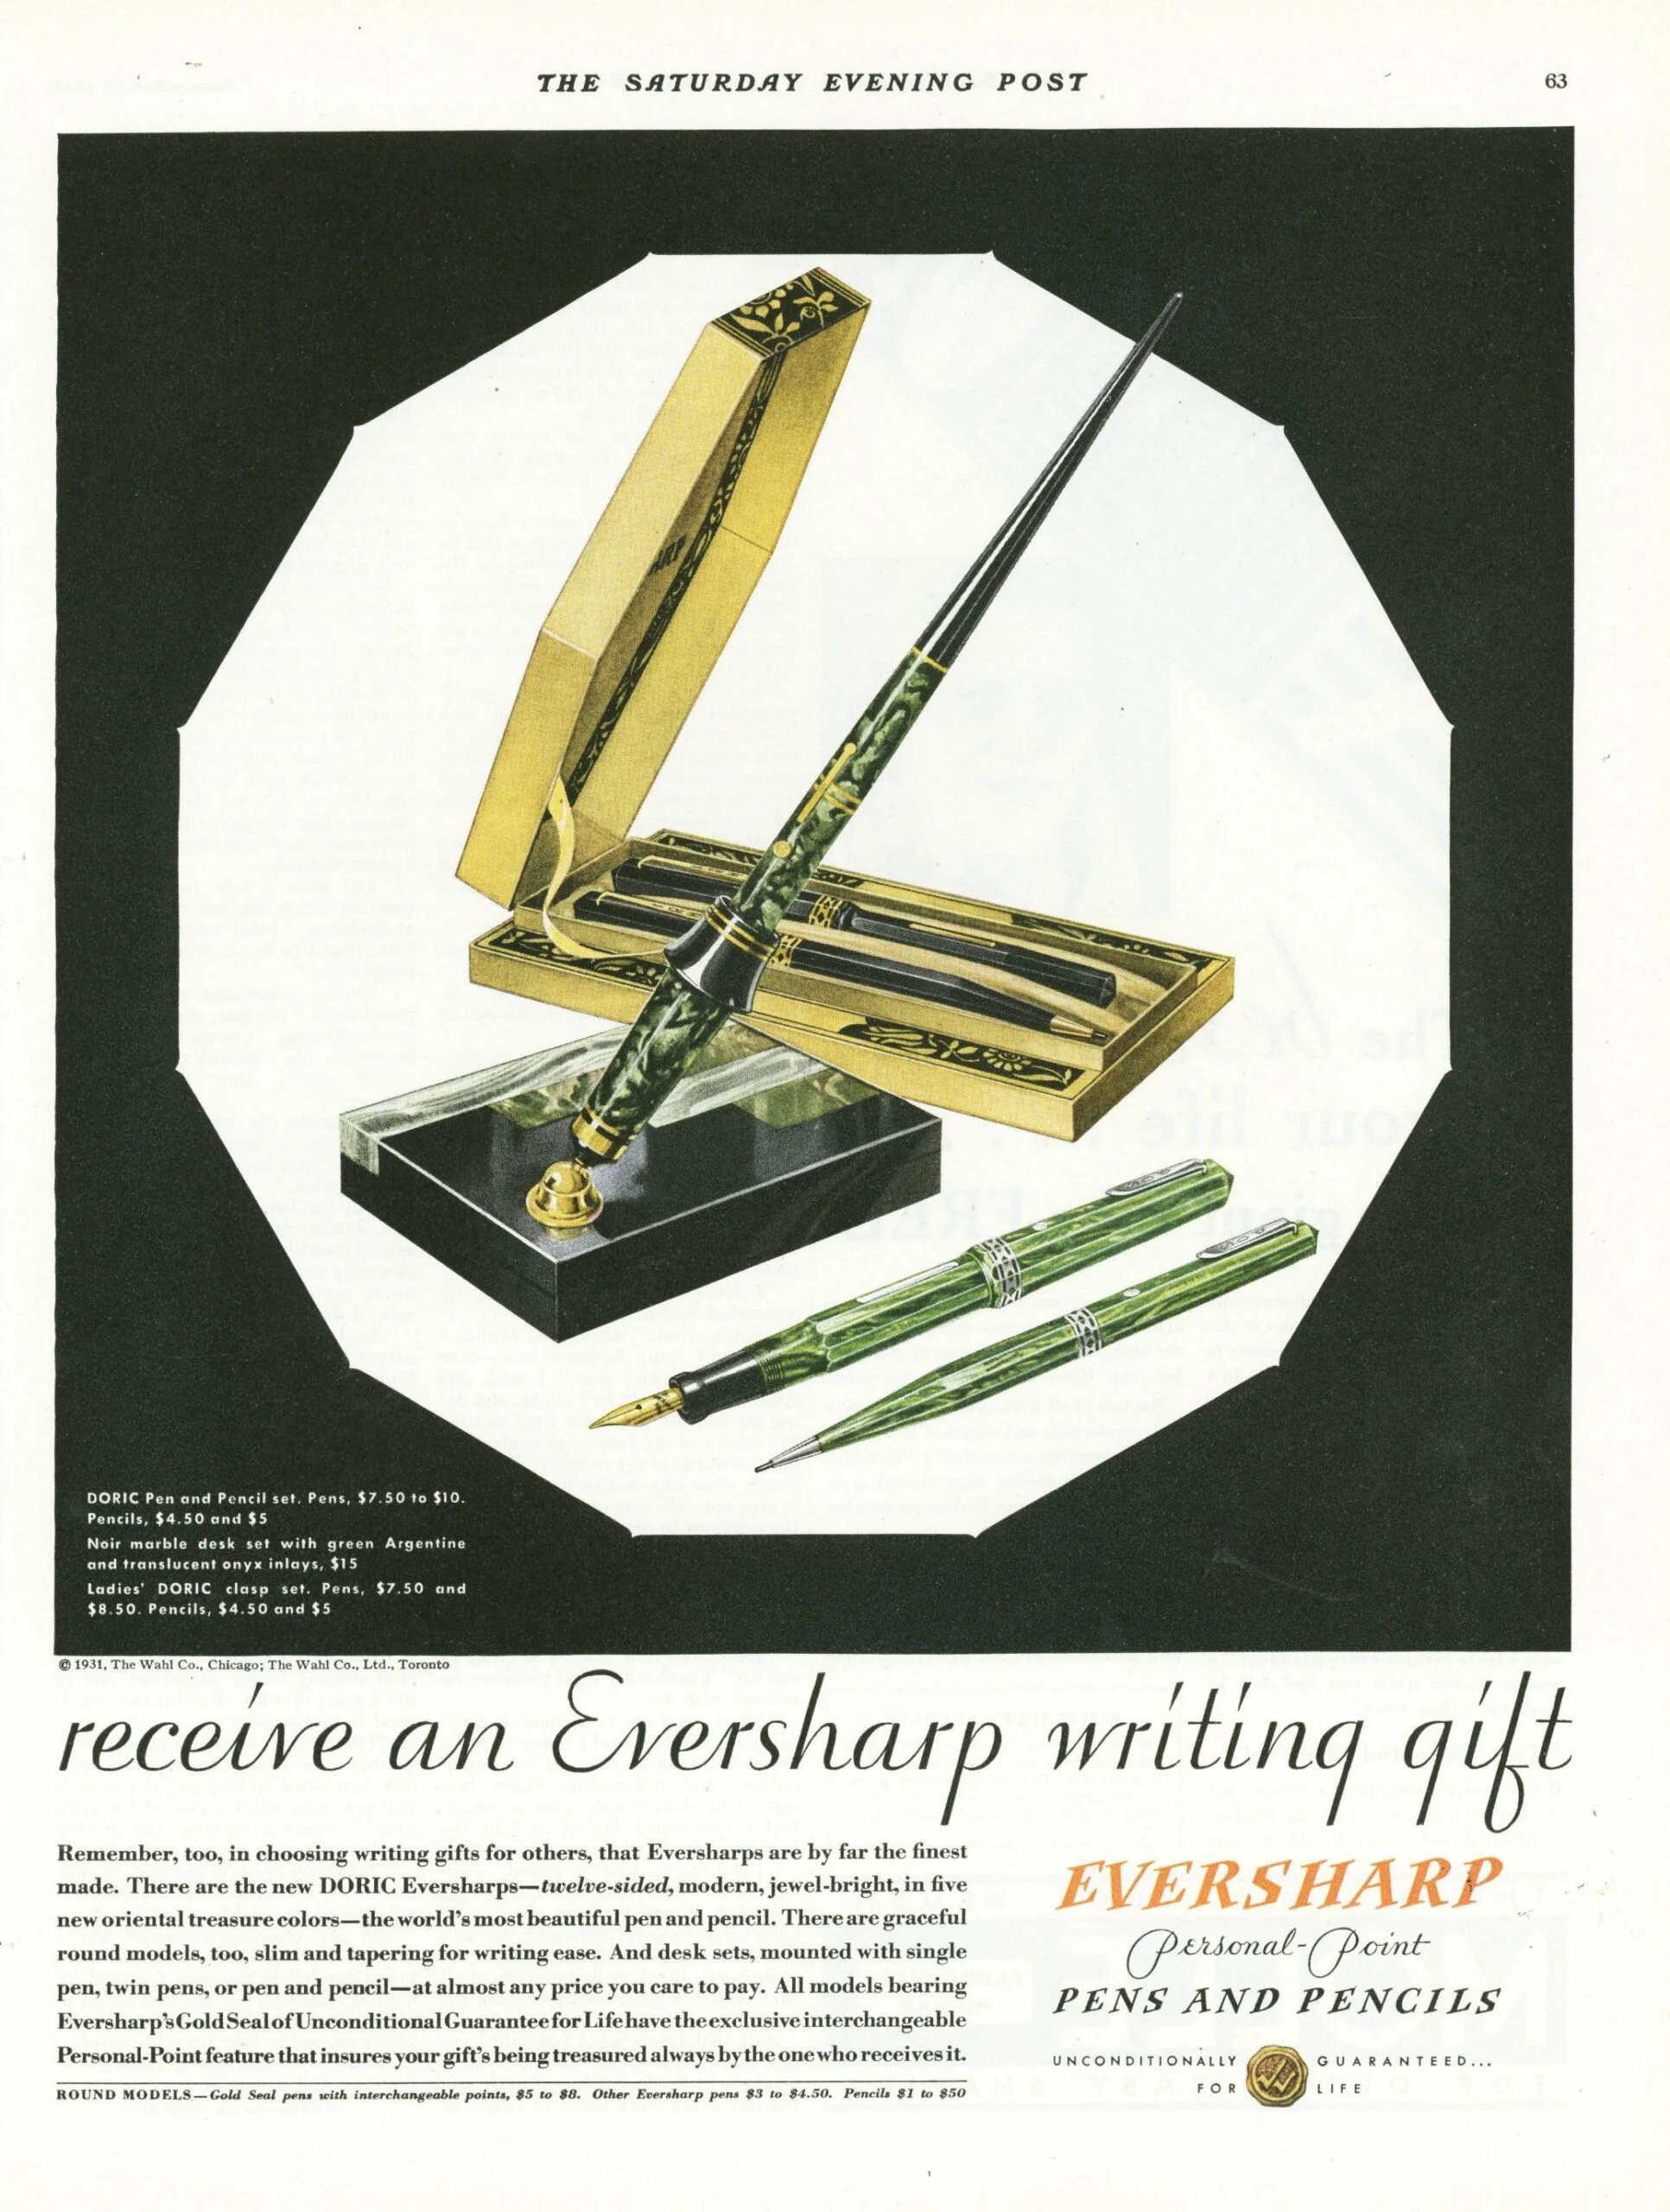 vintage eversharp doric green shell senior fountain pen pencil set advertisement2